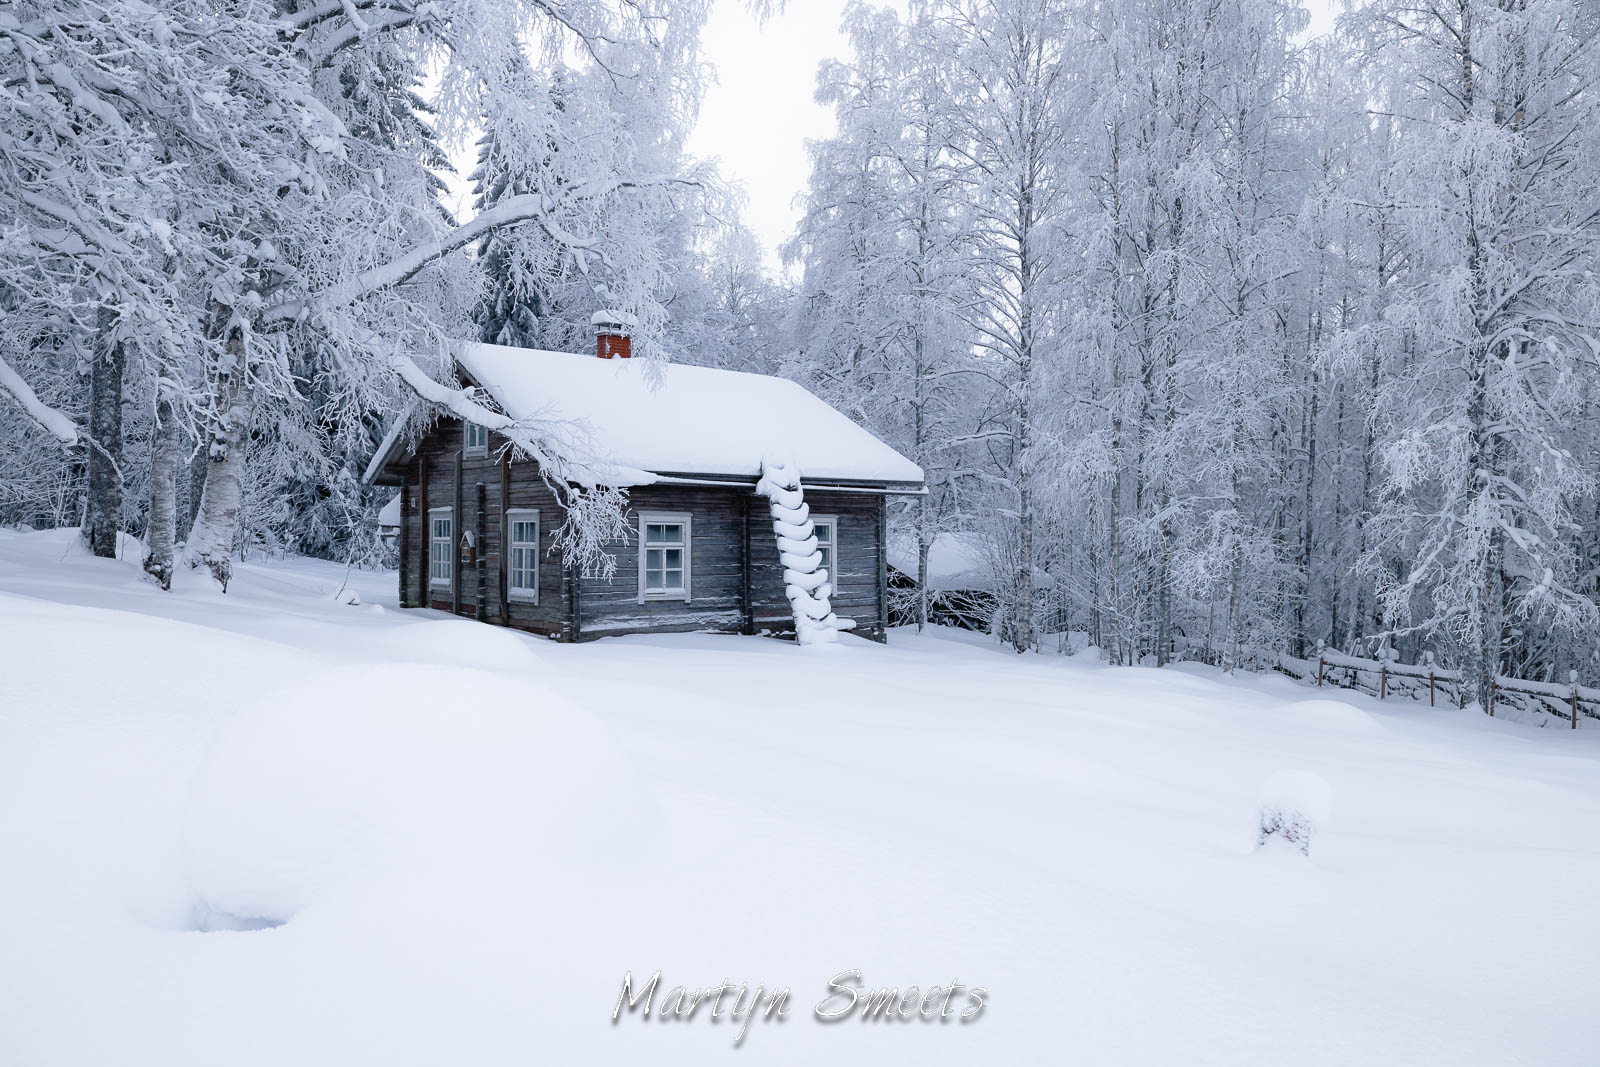 Cabin in the snow, Finland